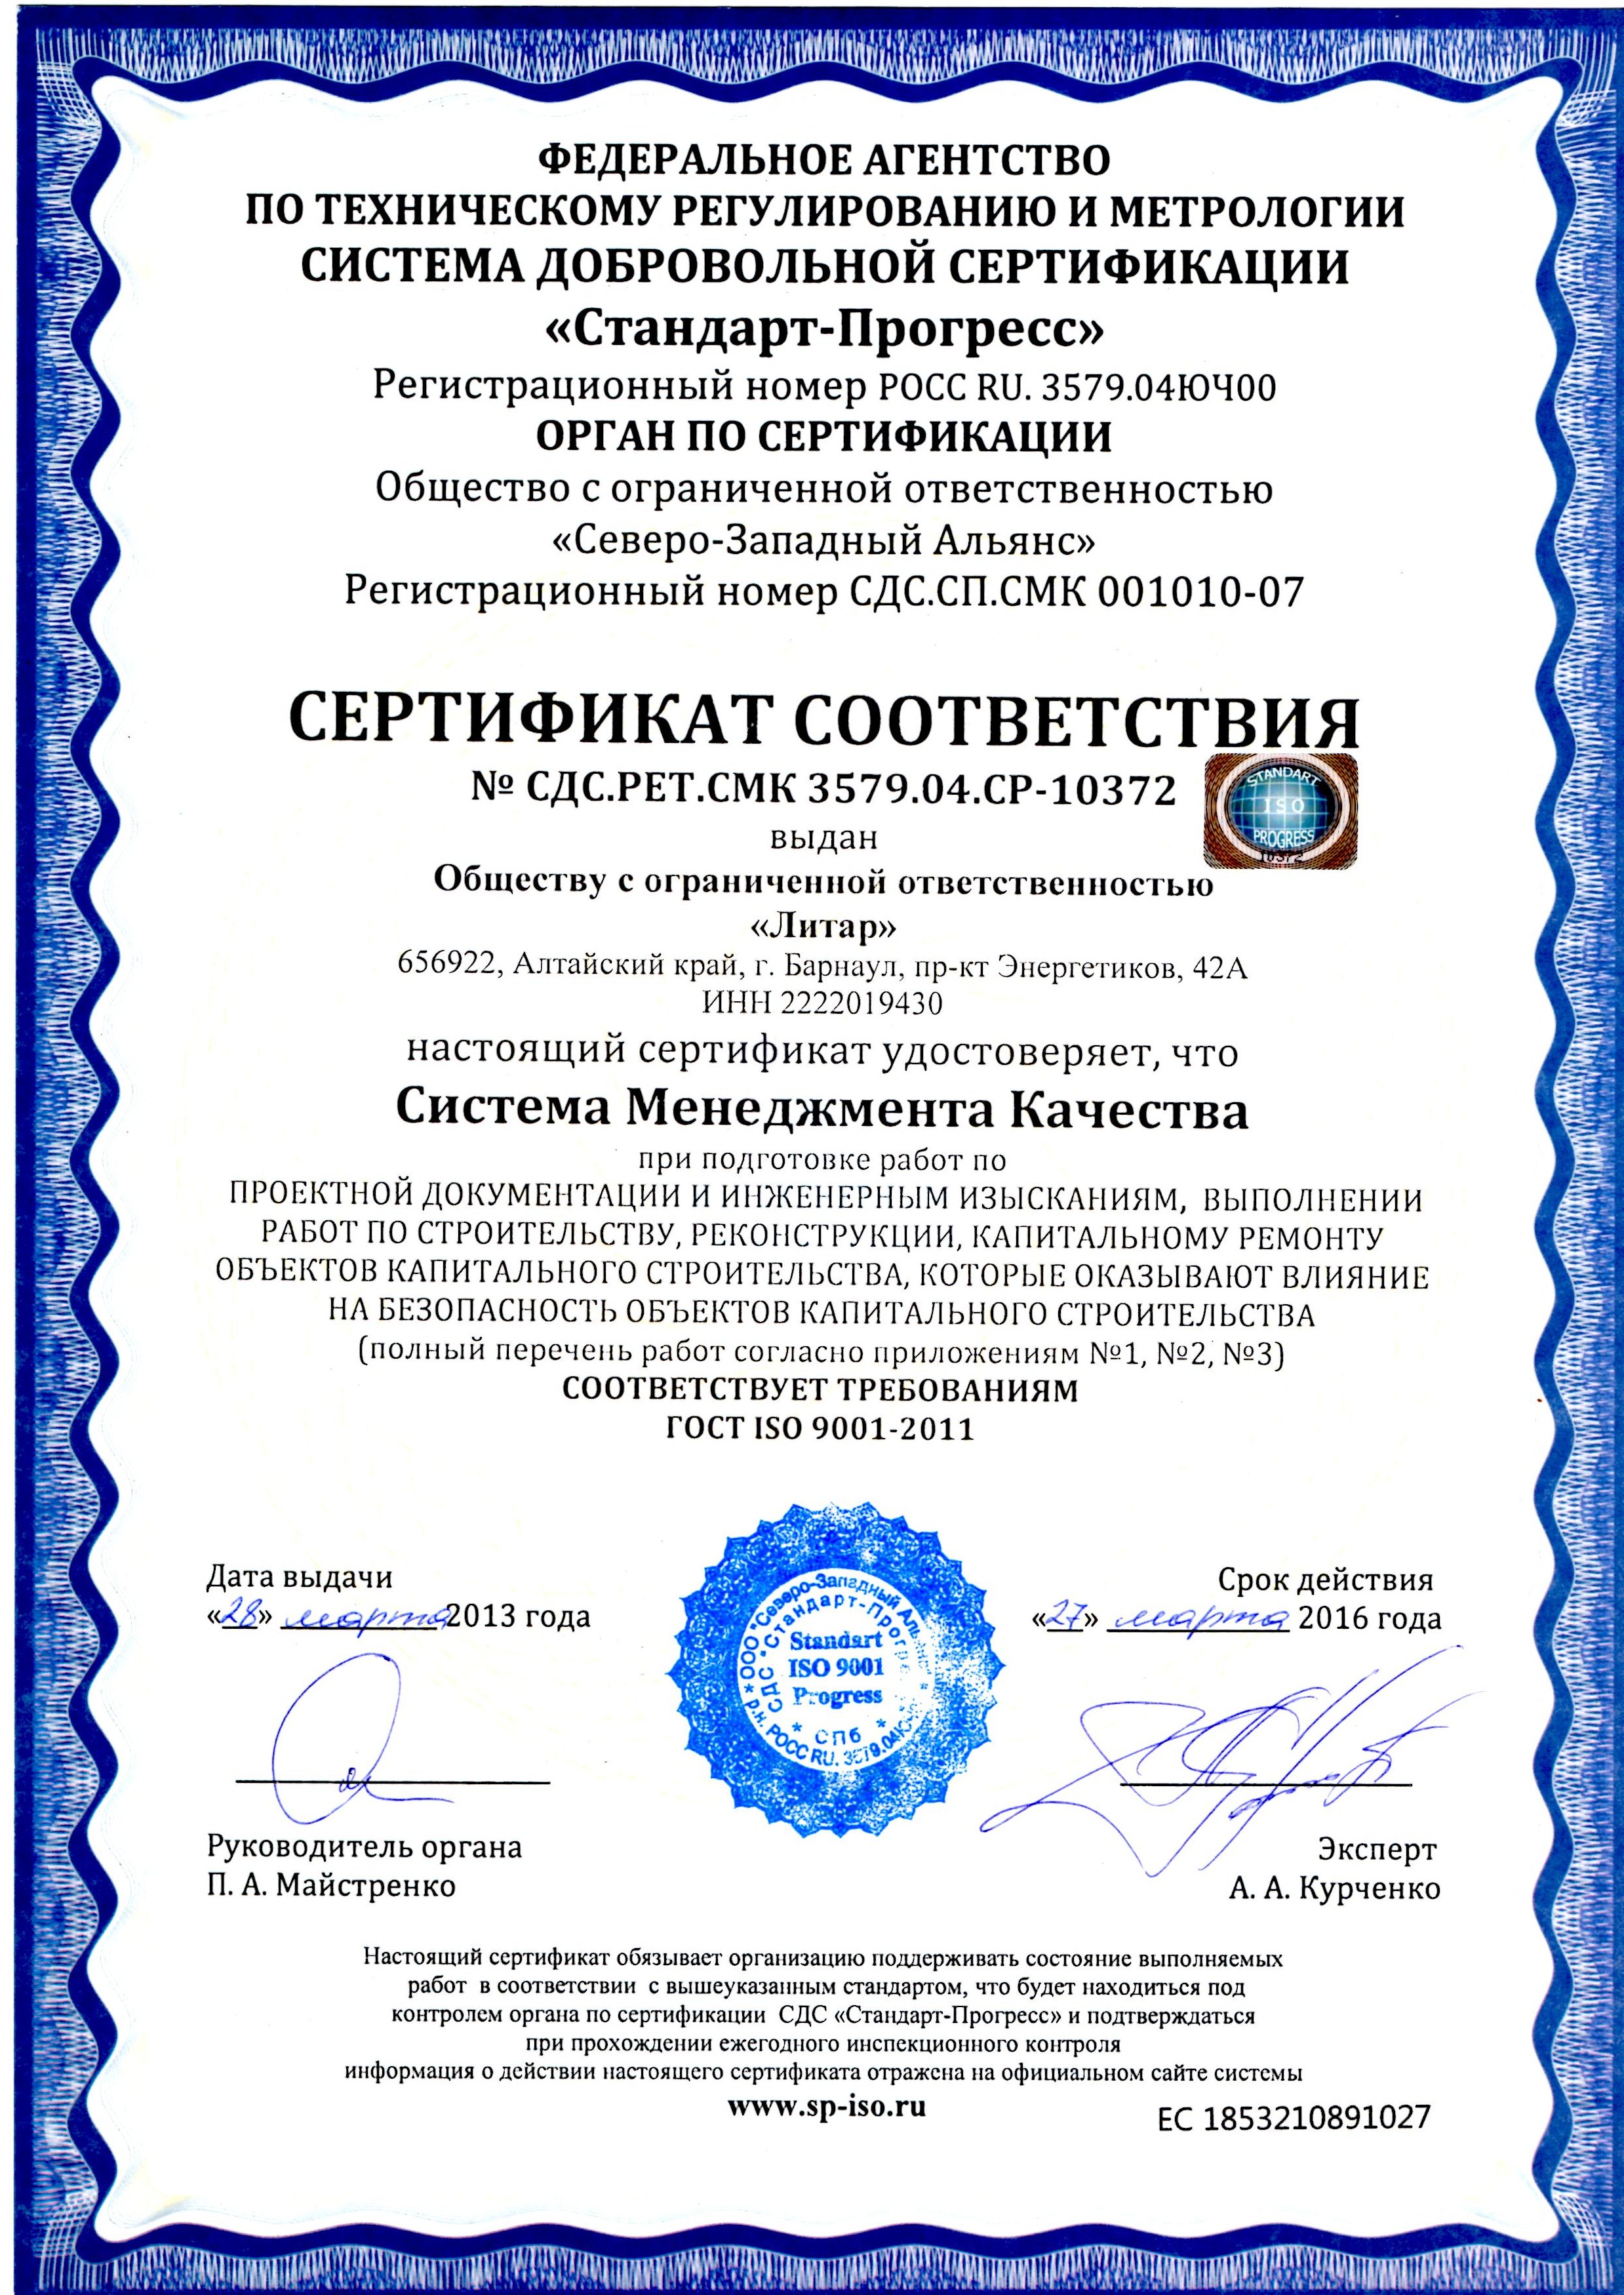 ООО "Литар" получен сертификат соответствия требованиям ГОСТ ISO 9001-2011.